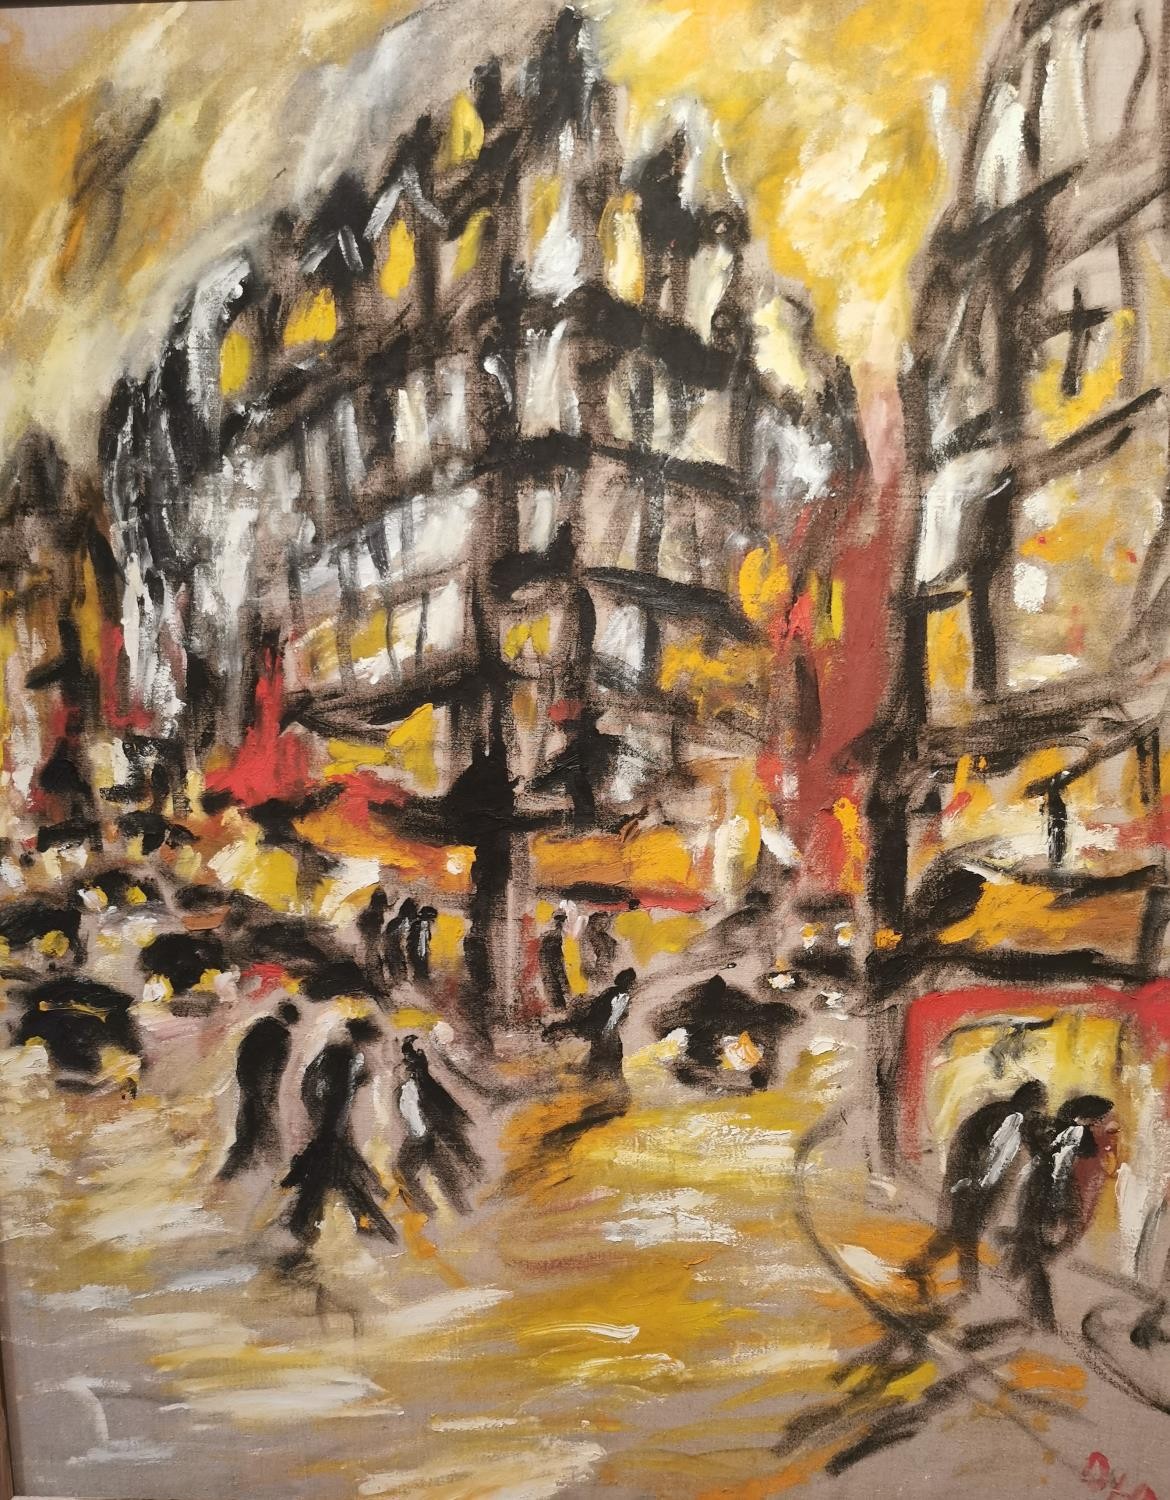 Daniele Mascaretti a.k.a "BoBo", large oil on canvas of a city street scene with figures,